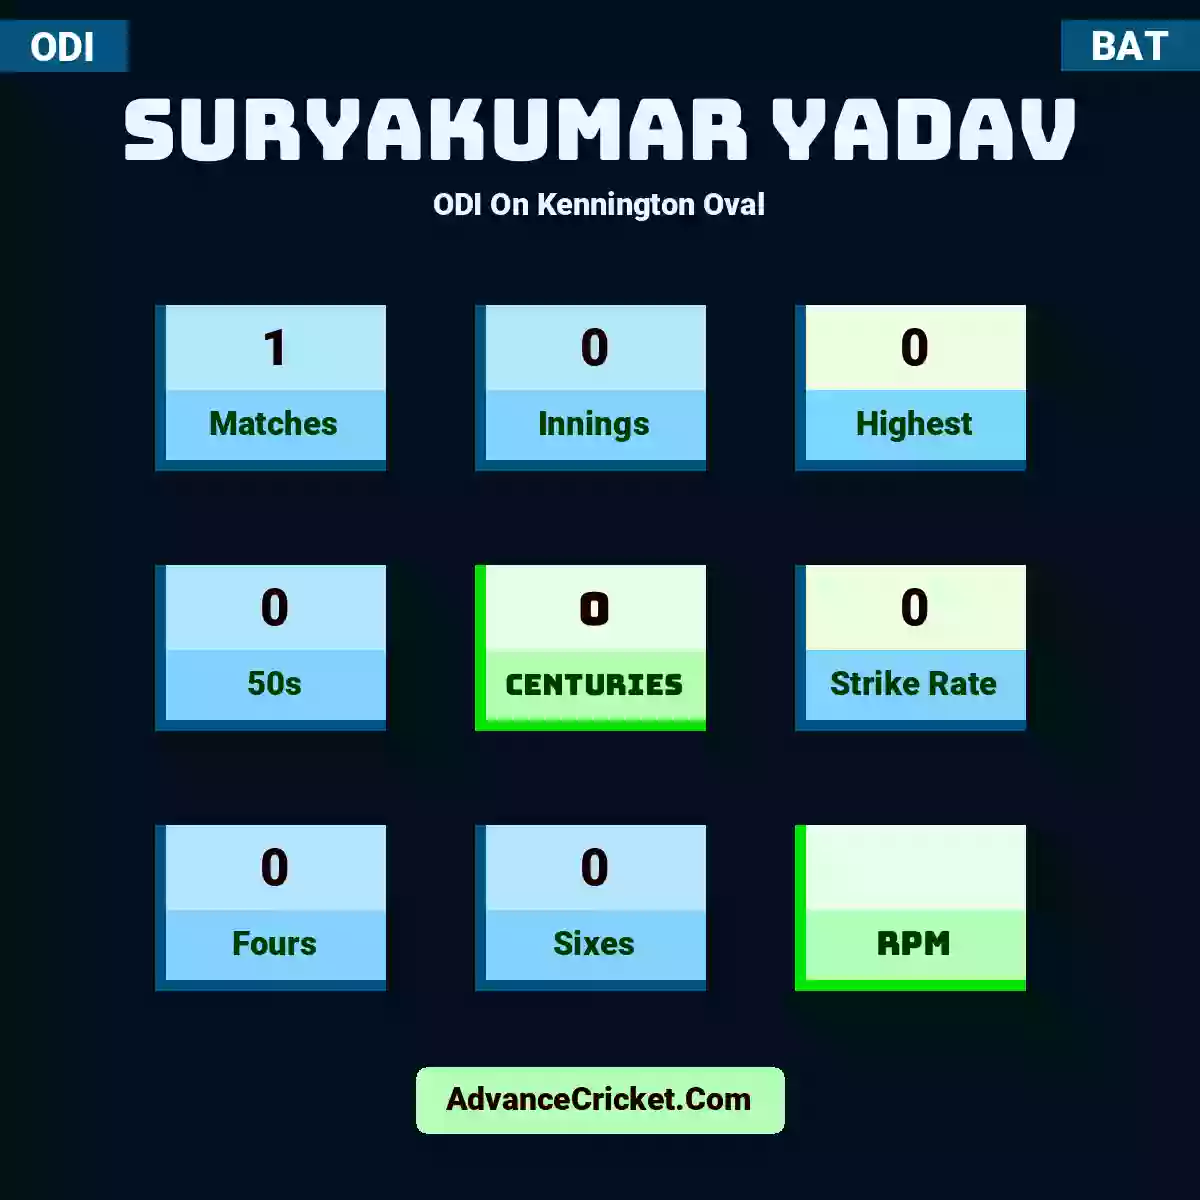 Suryakumar Yadav ODI  On Kennington Oval, Suryakumar Yadav played 1 matches, scored 0 runs as highest, 0 half-centuries, and 0 centuries, with a strike rate of 0. S.Yadav hit 0 fours and 0 sixes.